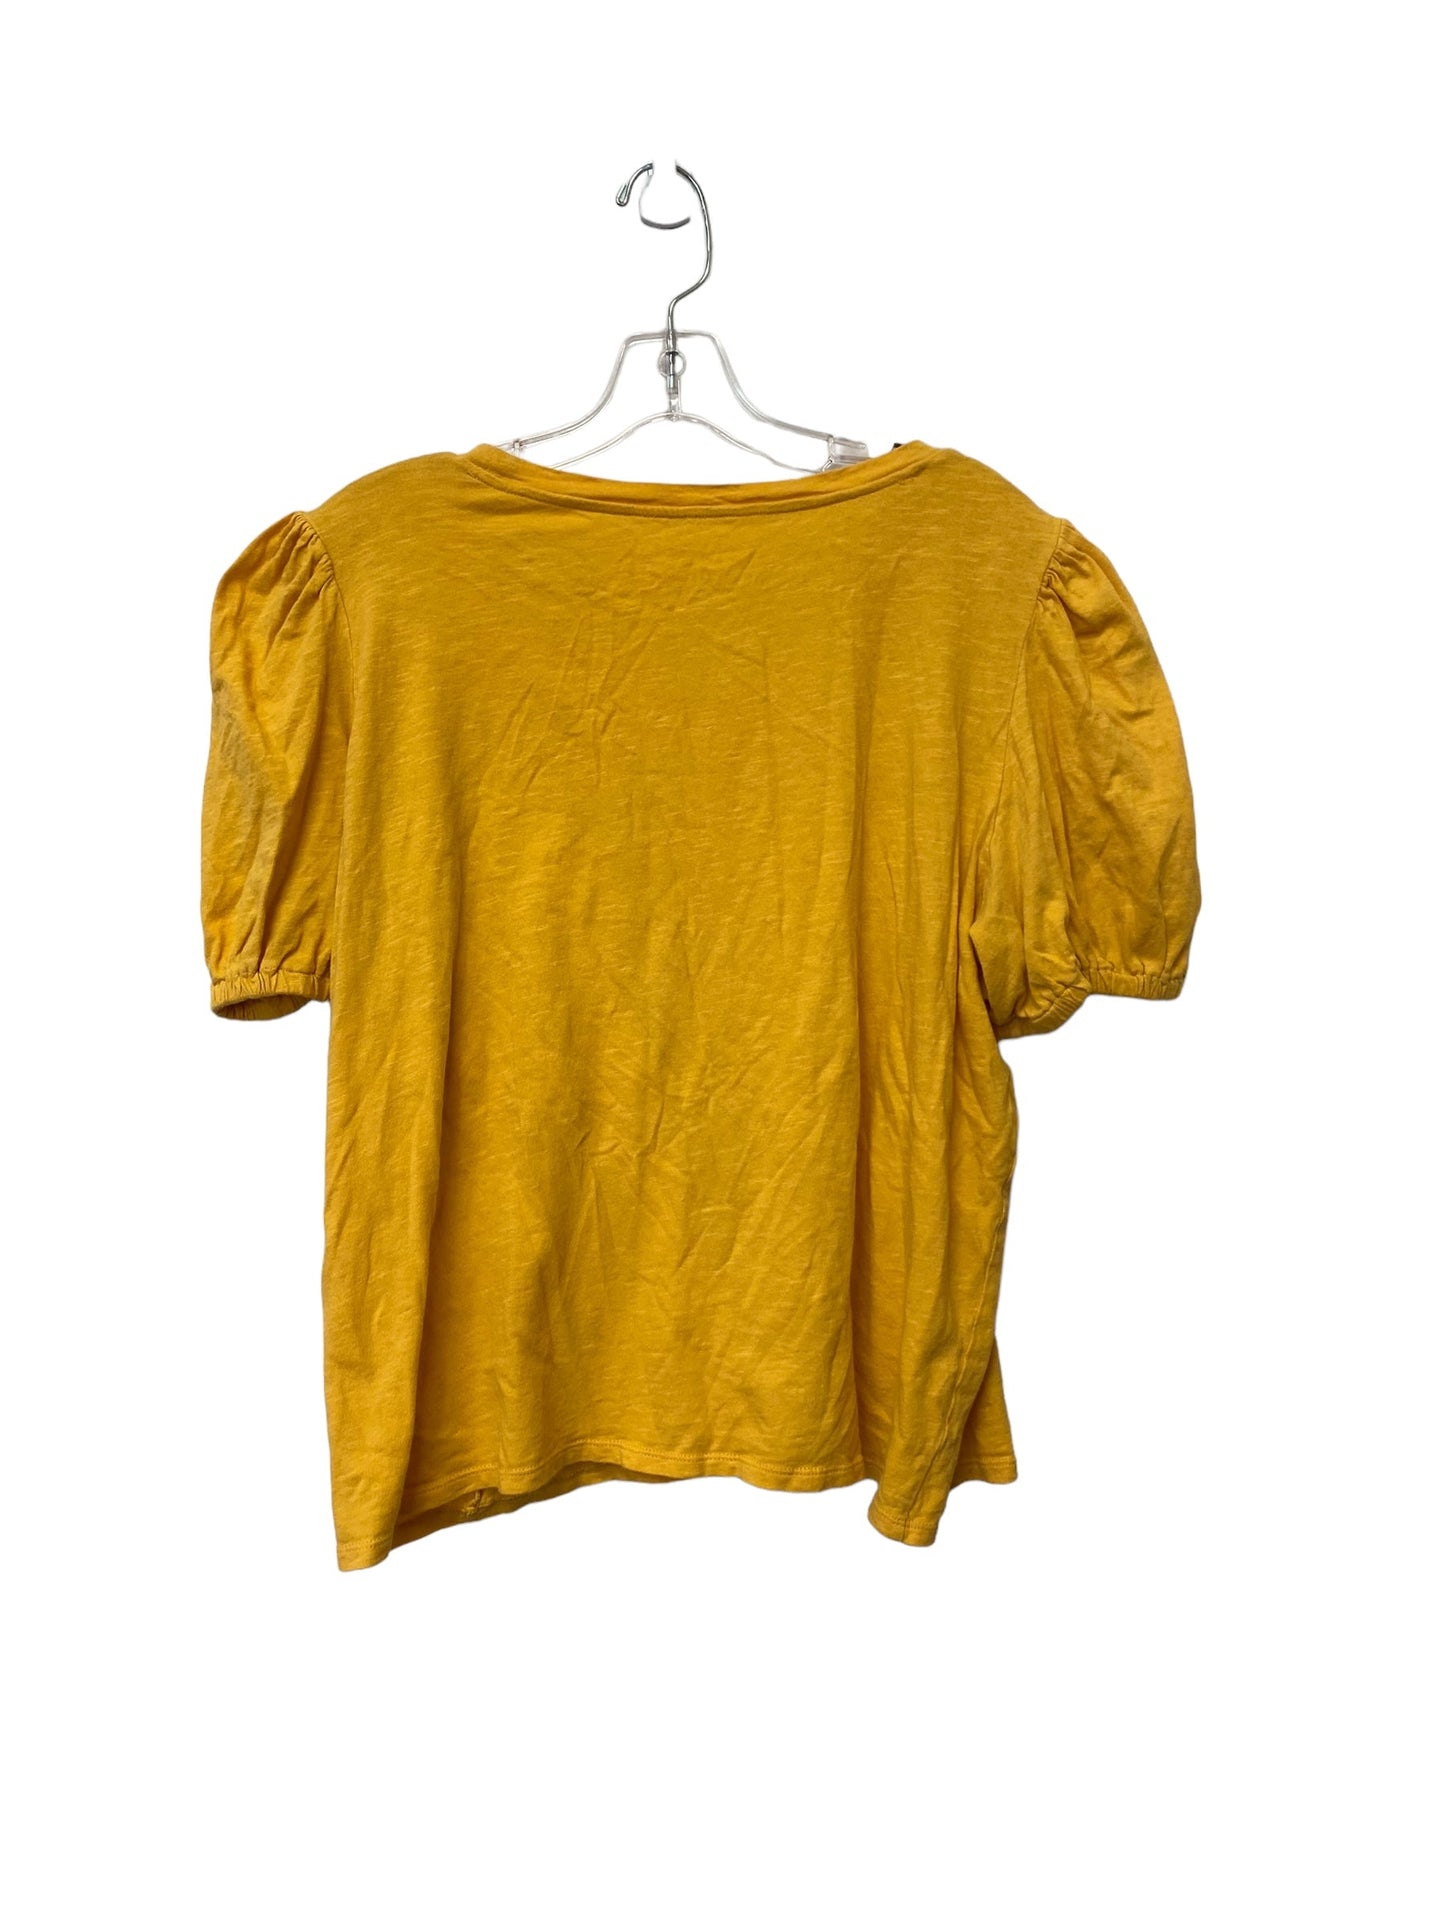 Yellow Top Short Sleeve Basic Clothes Mentor, Size Xxl